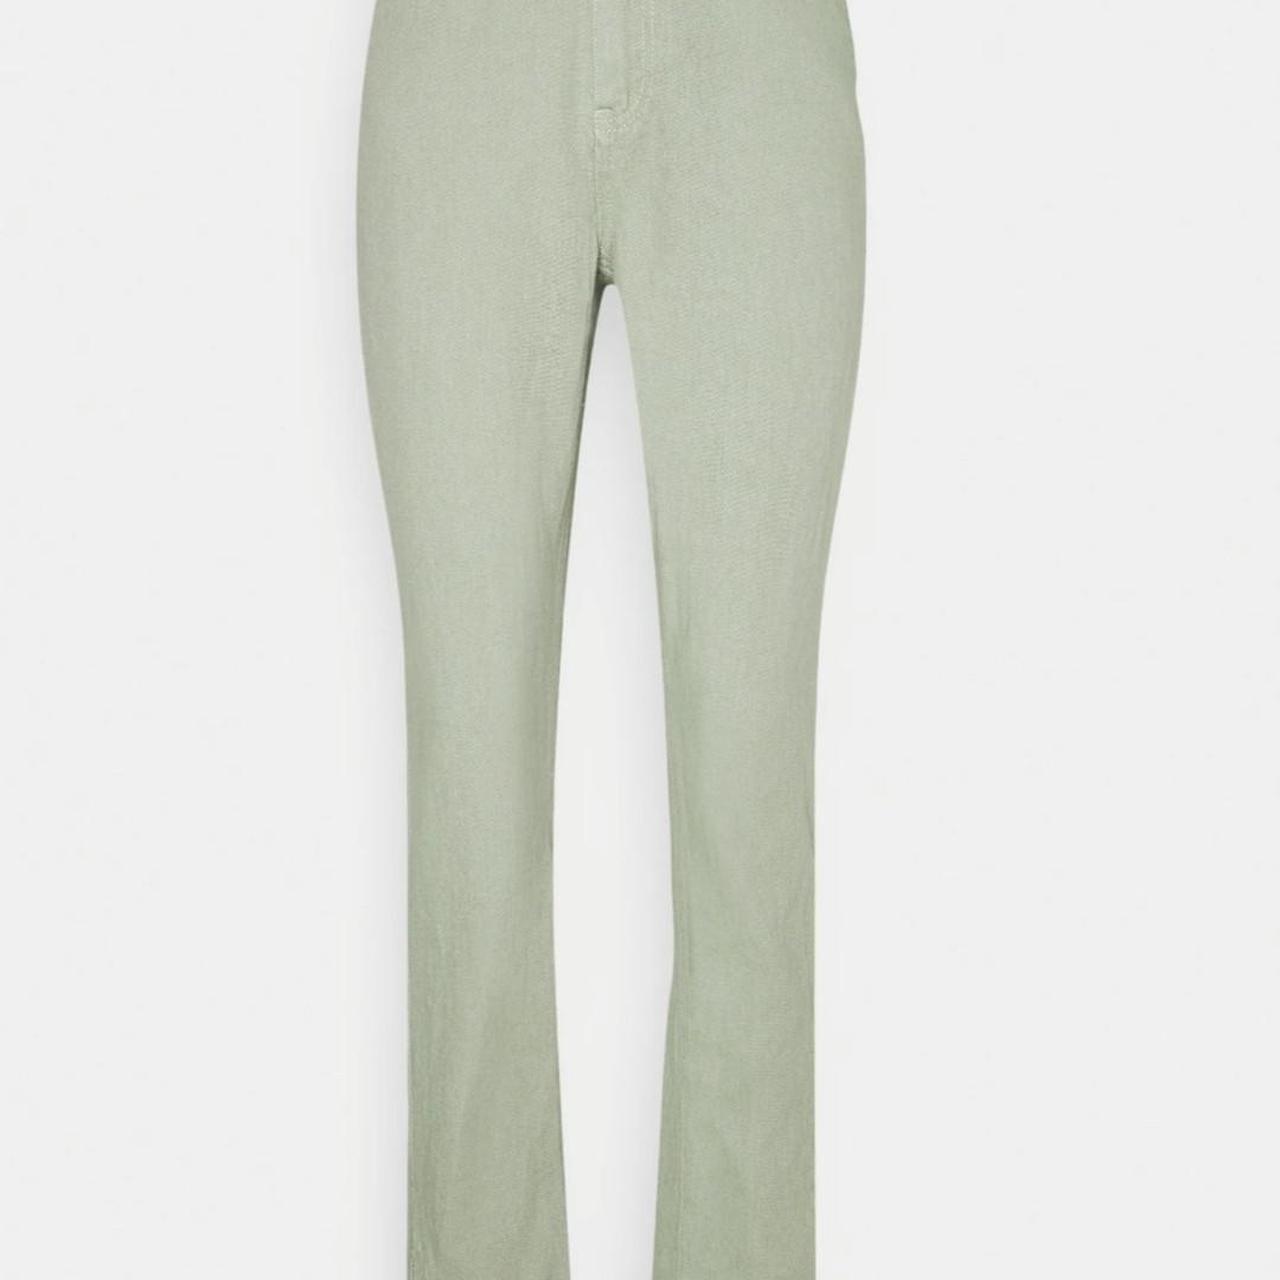 Ankle slit green jeans high waist - Depop